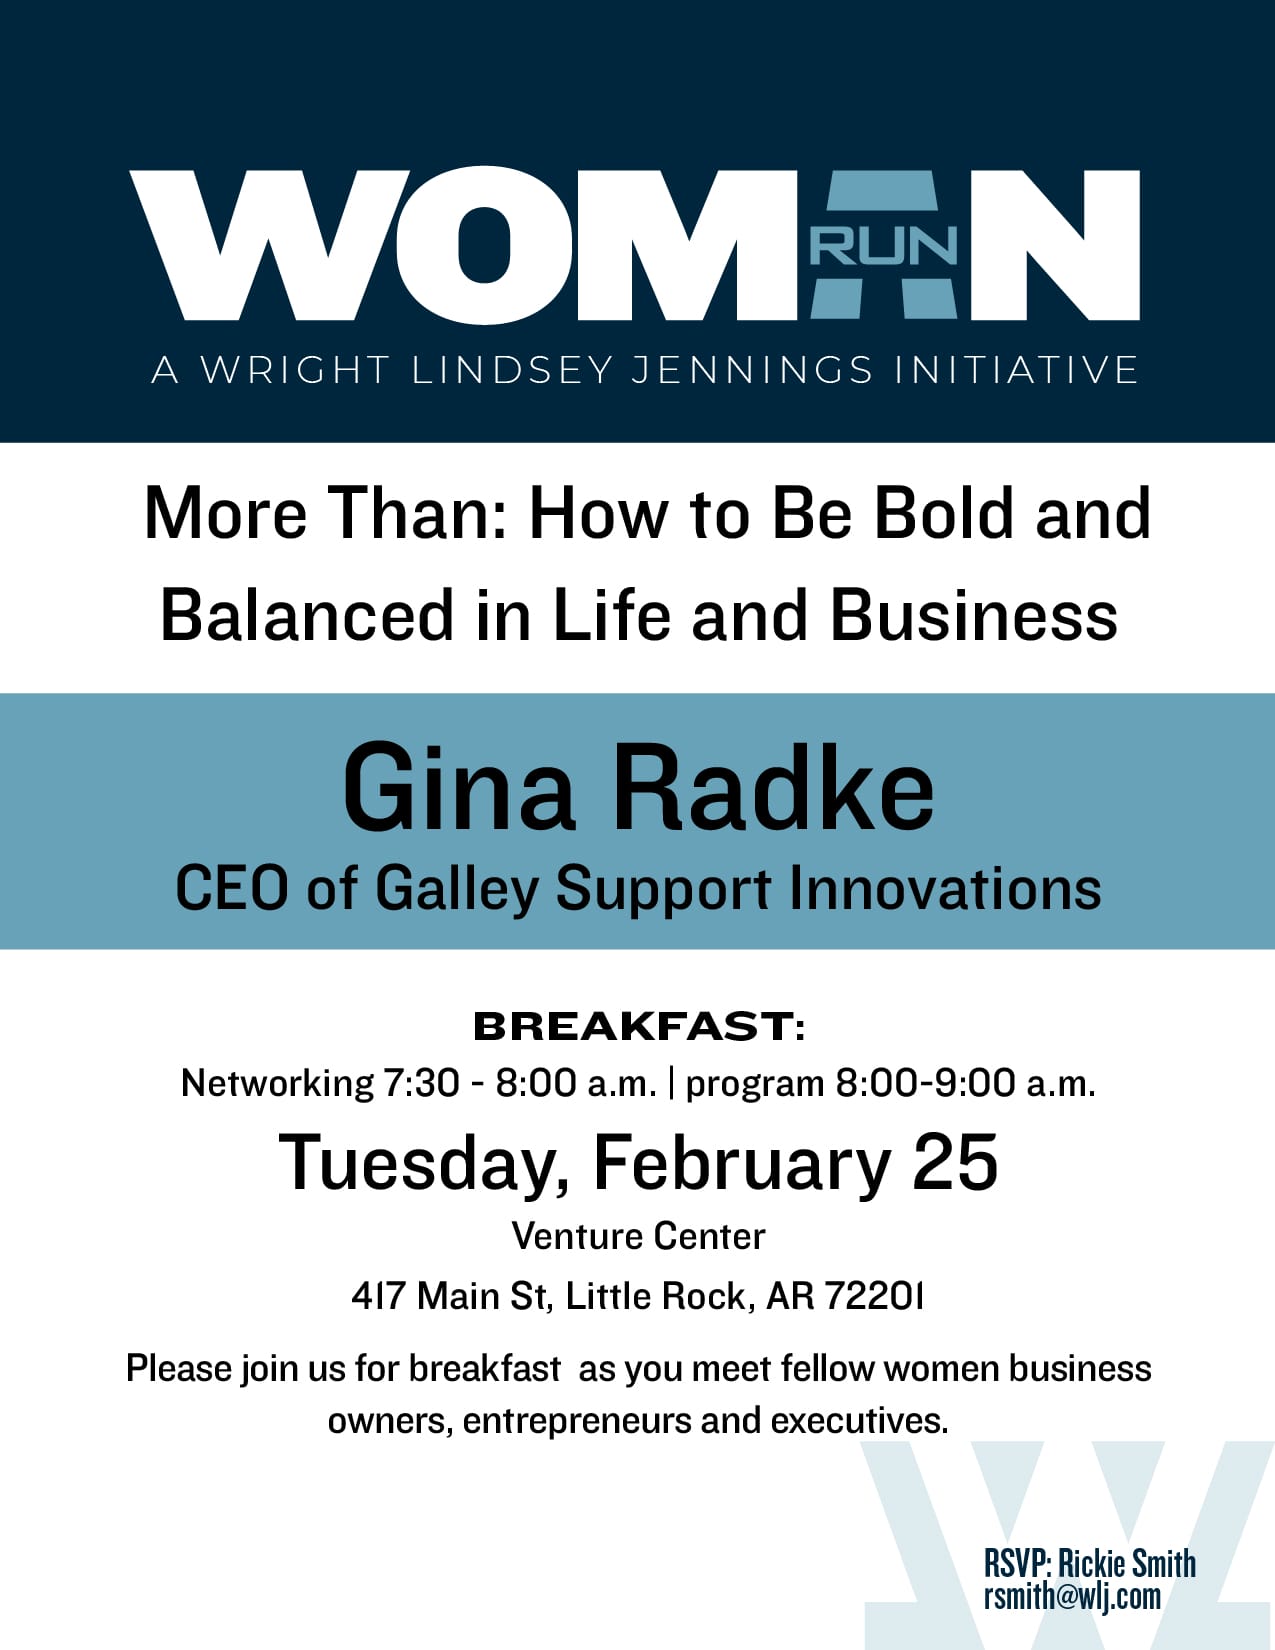 Woman Run Event with Gina Radke in February 2020